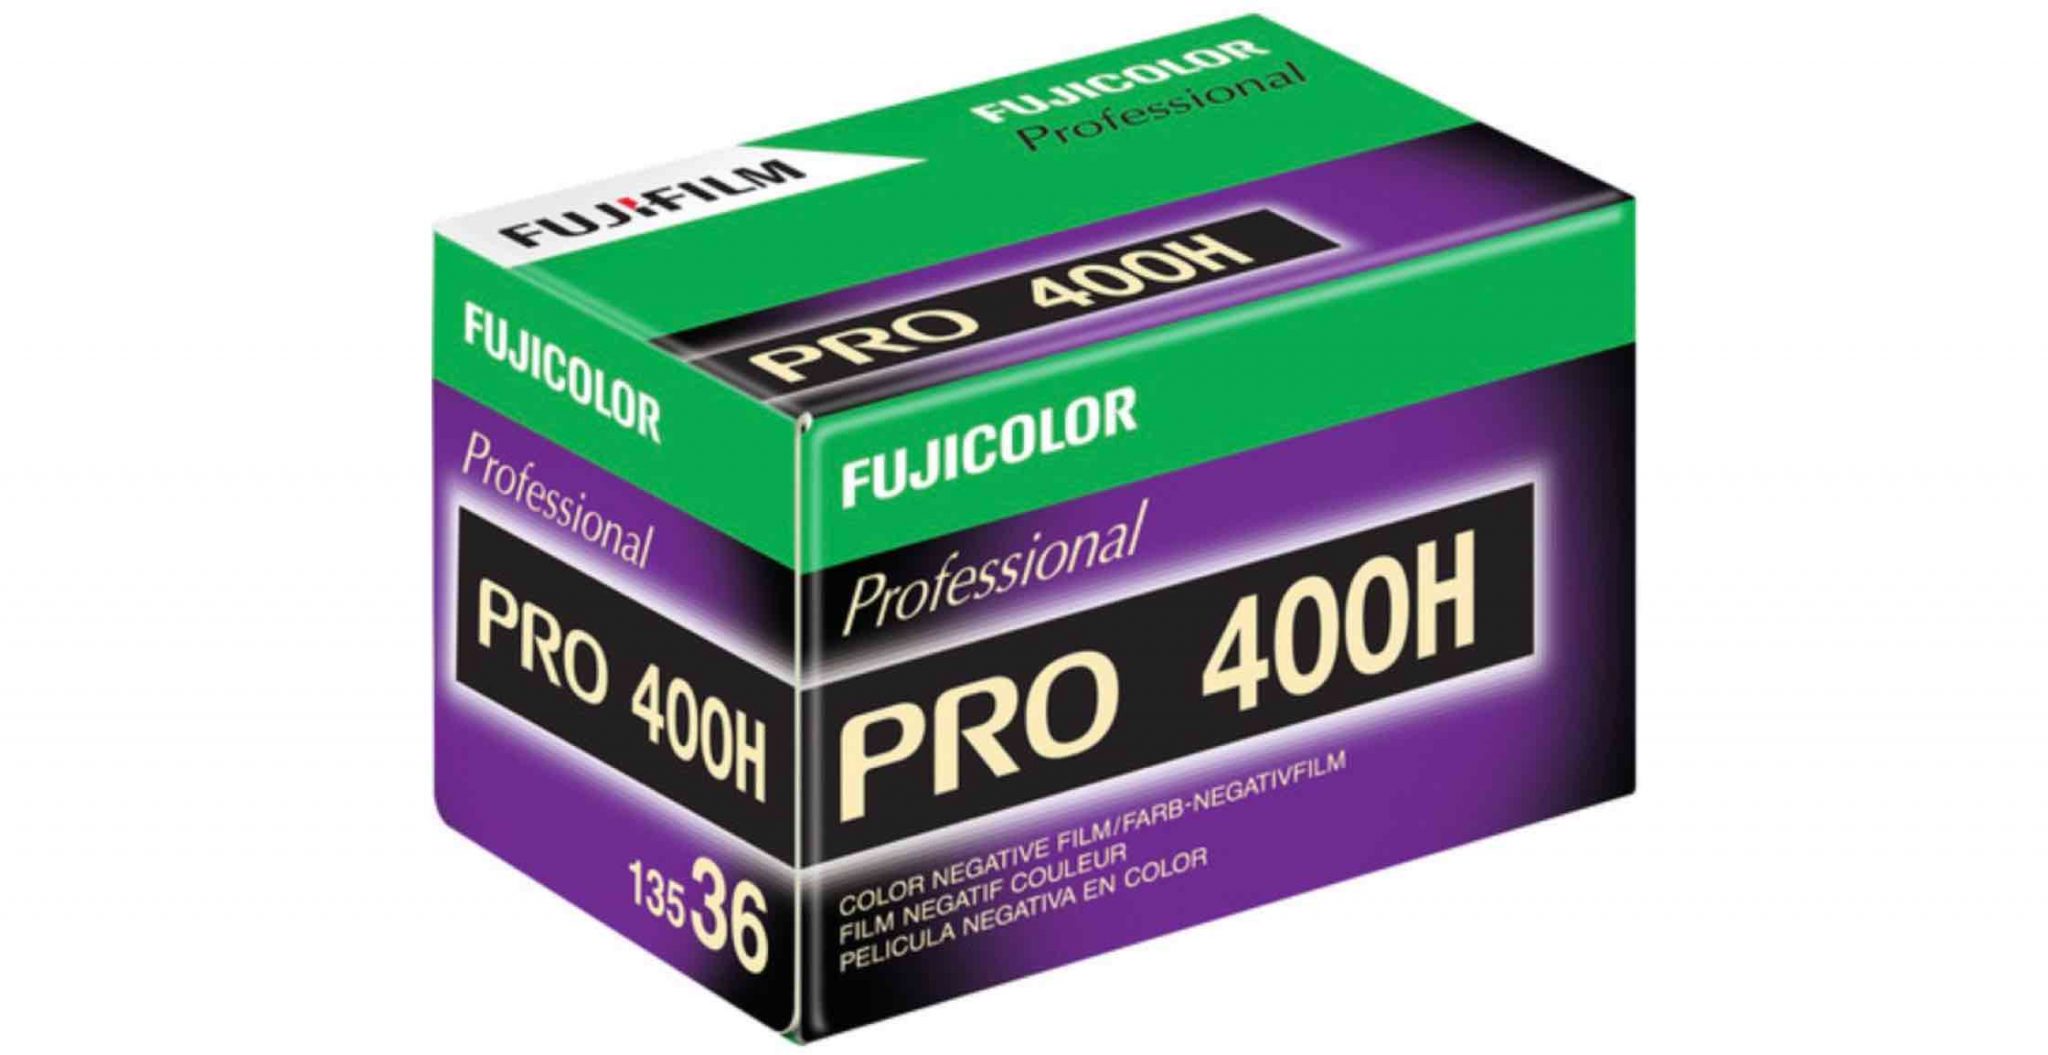 Fujifilm pro 400H